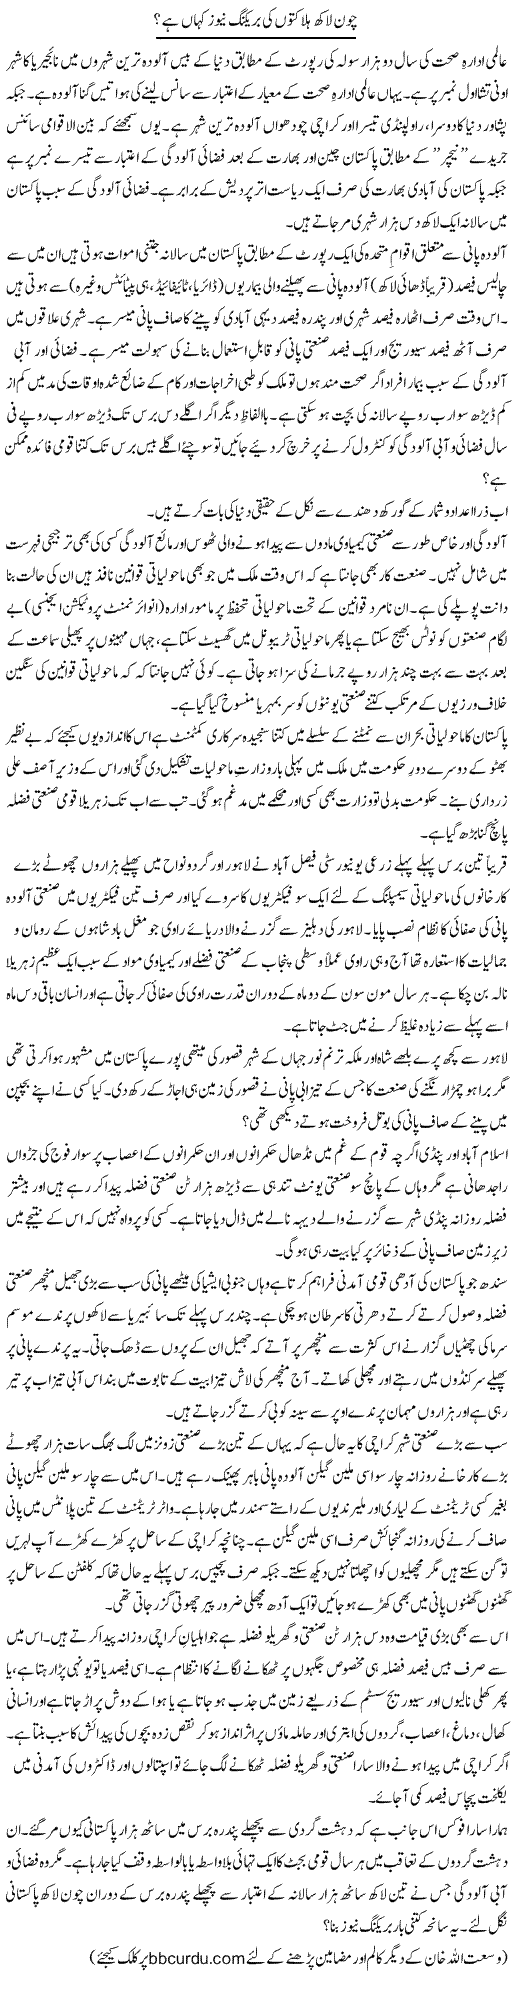 Chawan Lakh Halakton Ki Breaking News Kahan Hai? | Wusat Ullah Khan | Daily Urdu Columns